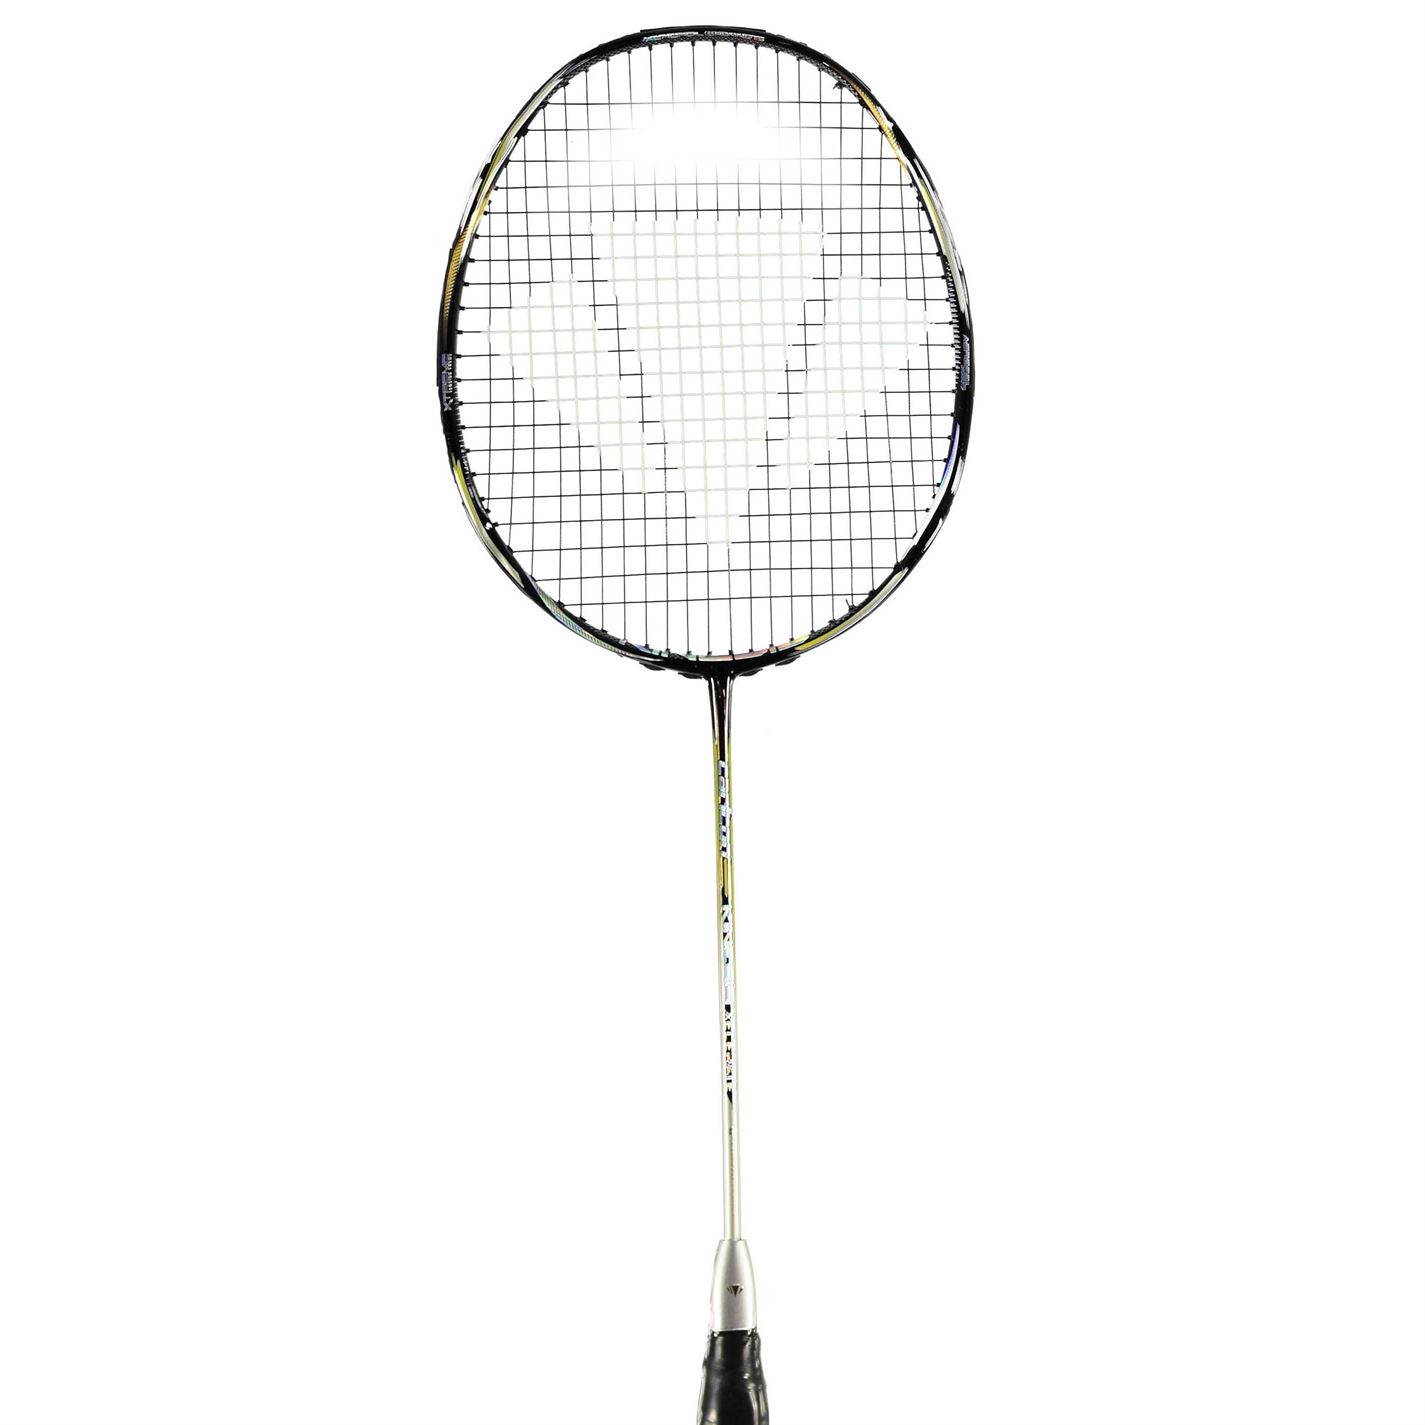 Jane Austen approach Towing Carlton Kinesis Xelerate Badminton Racket